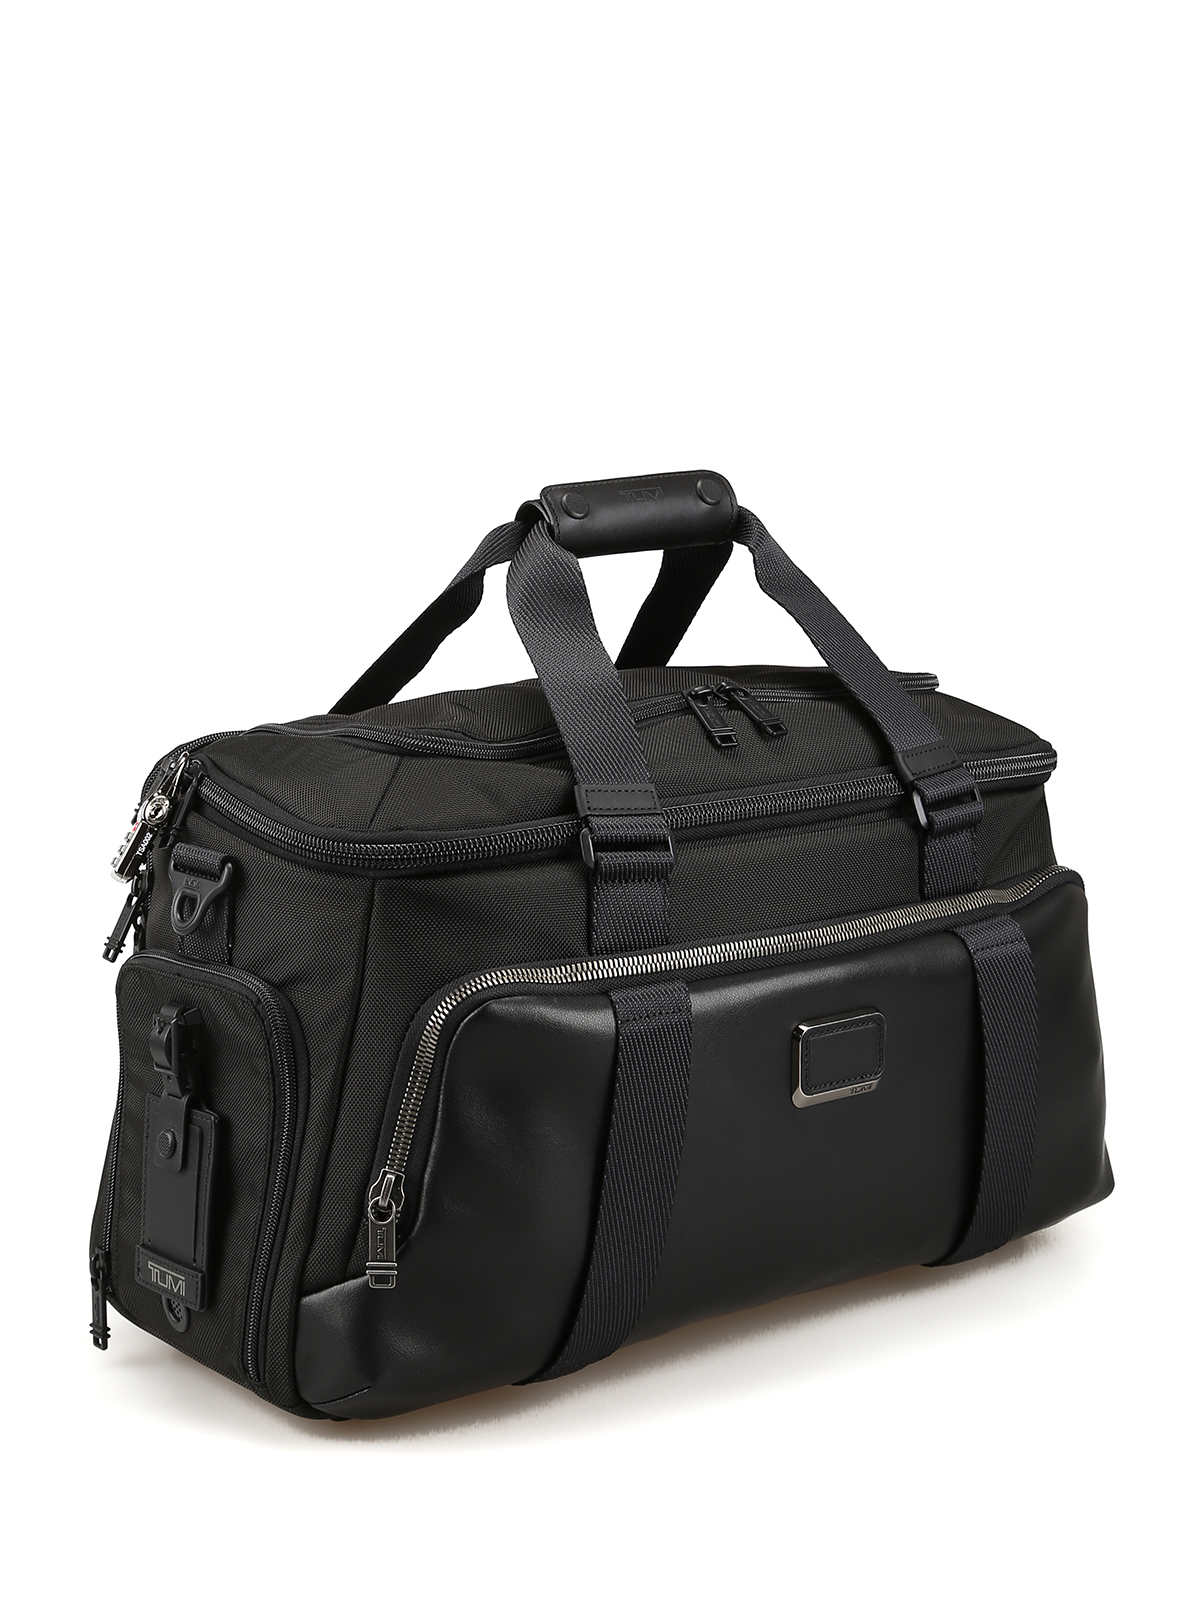 Luggage & Travel bags Tumi - Mccoy nylon gym bag - 0232322D | iKRIX.com